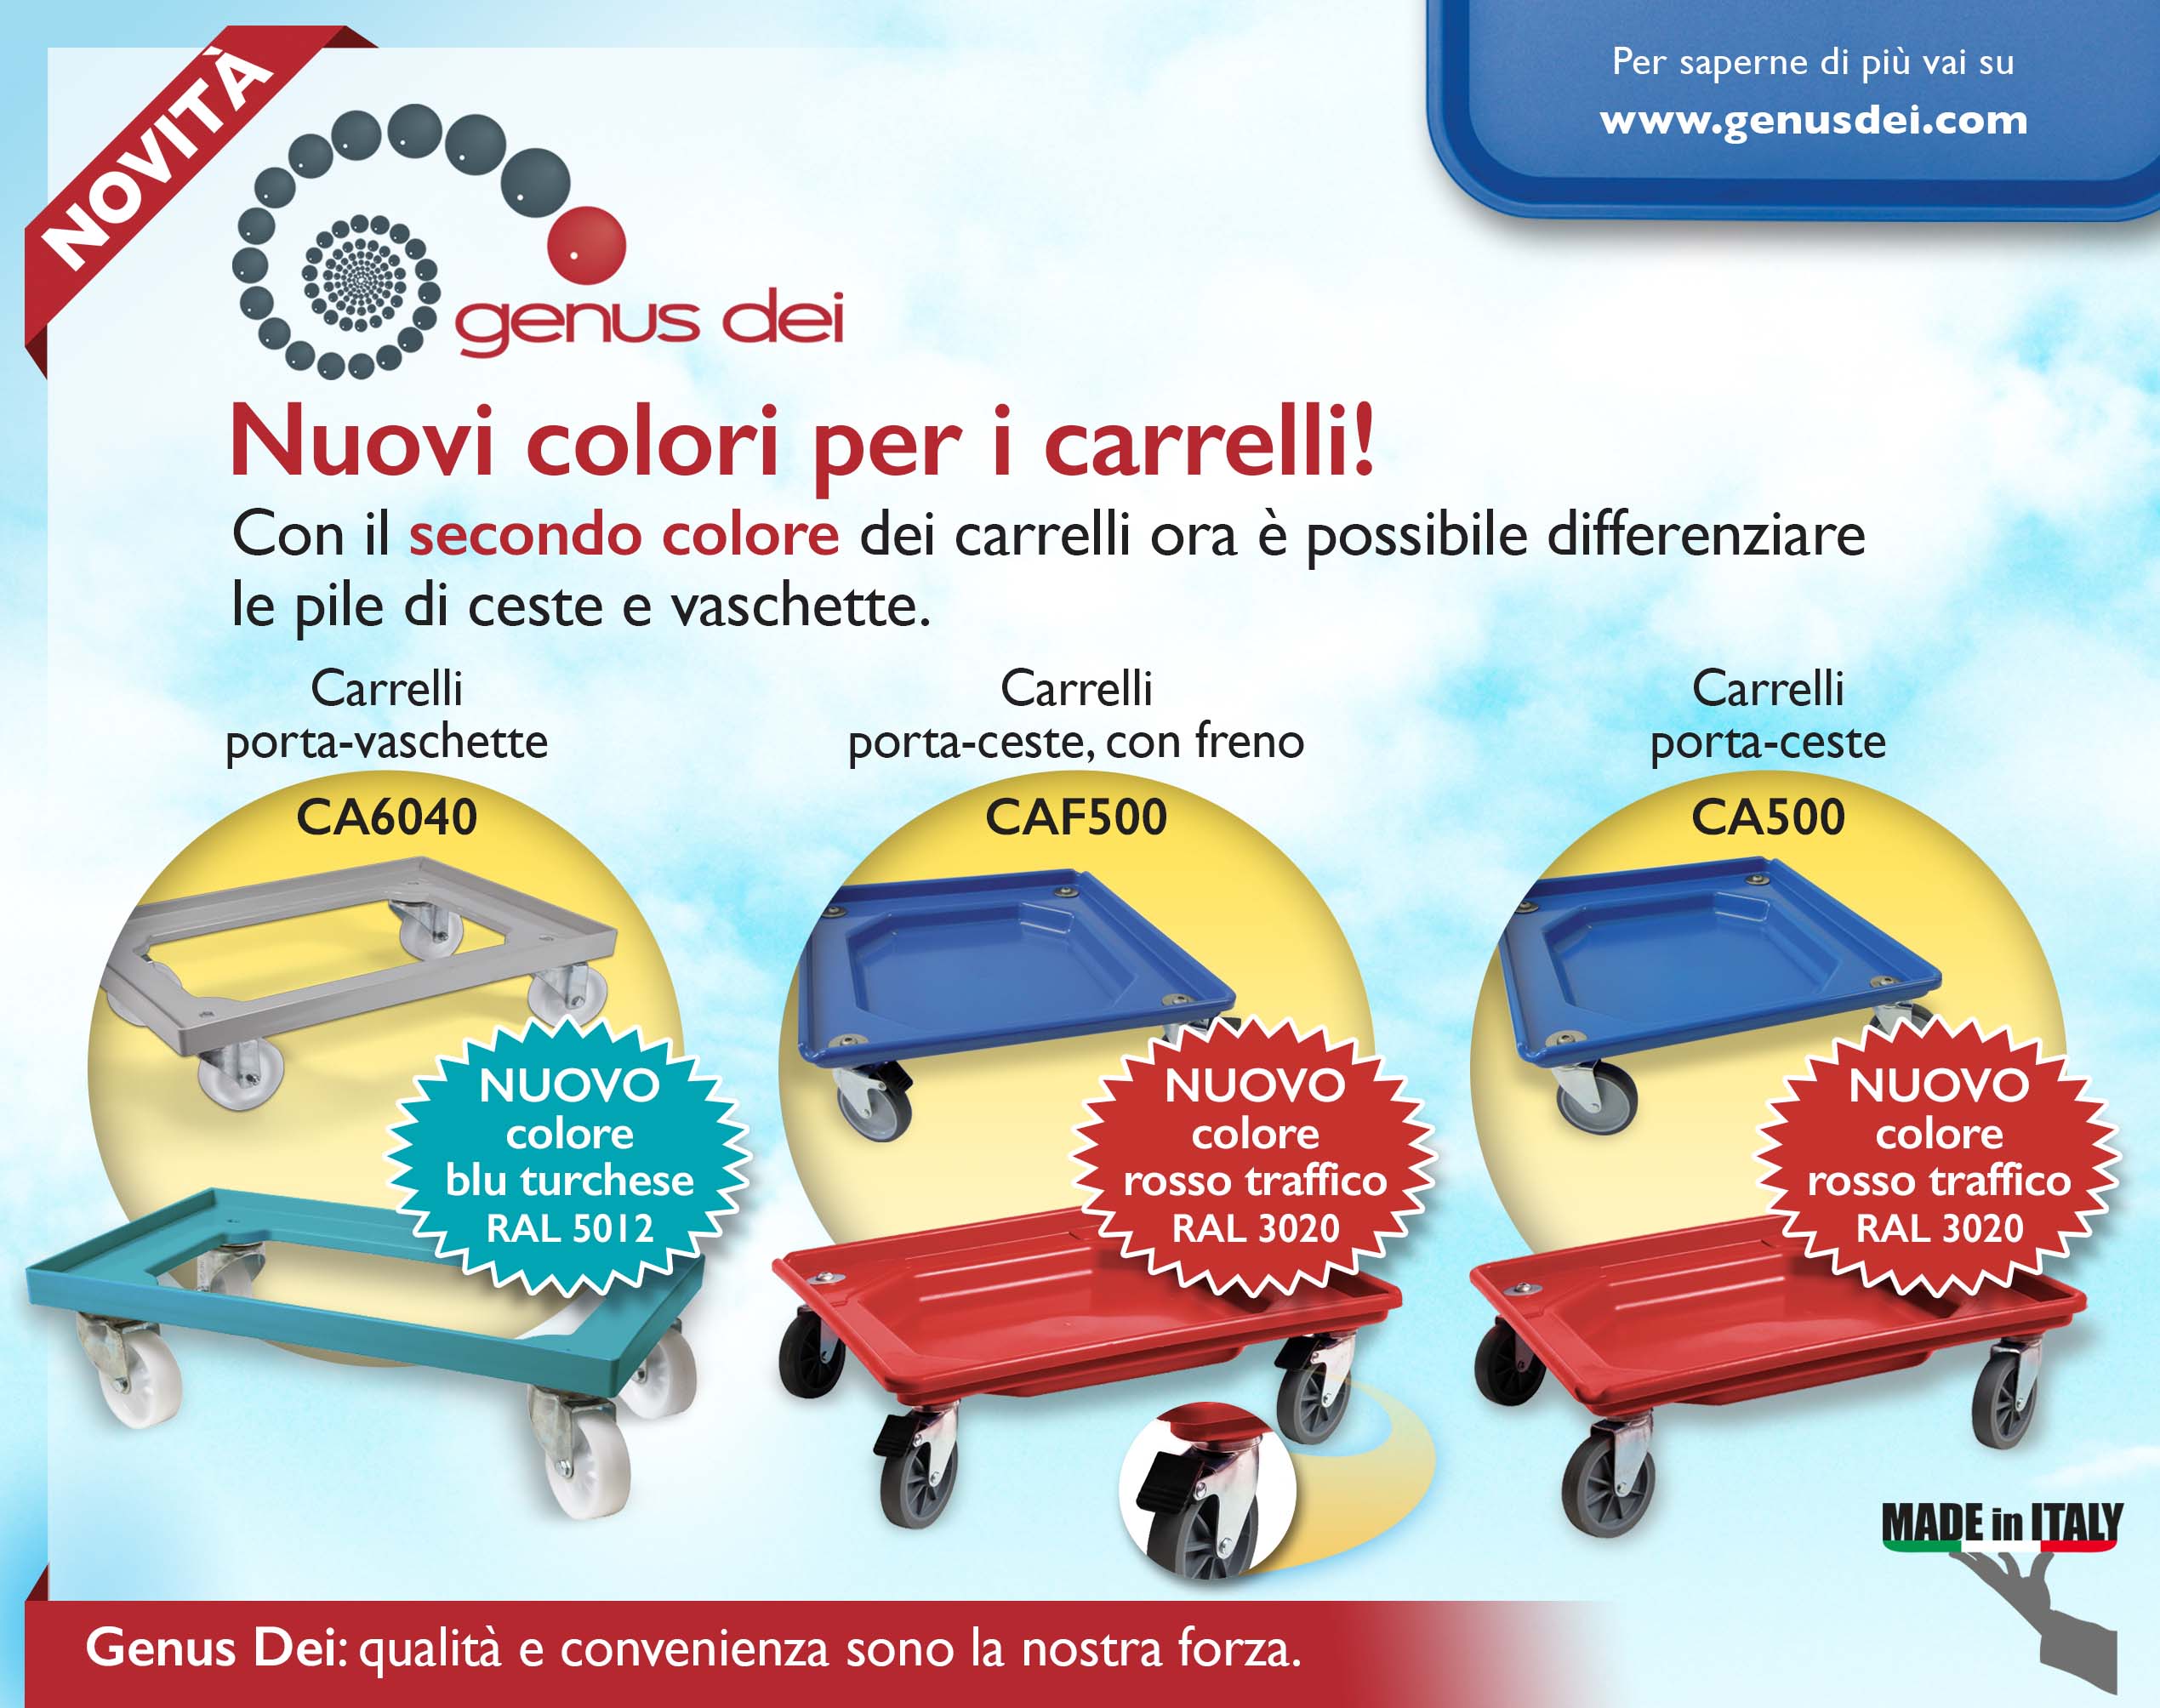 New Carts Colors Genus Dei